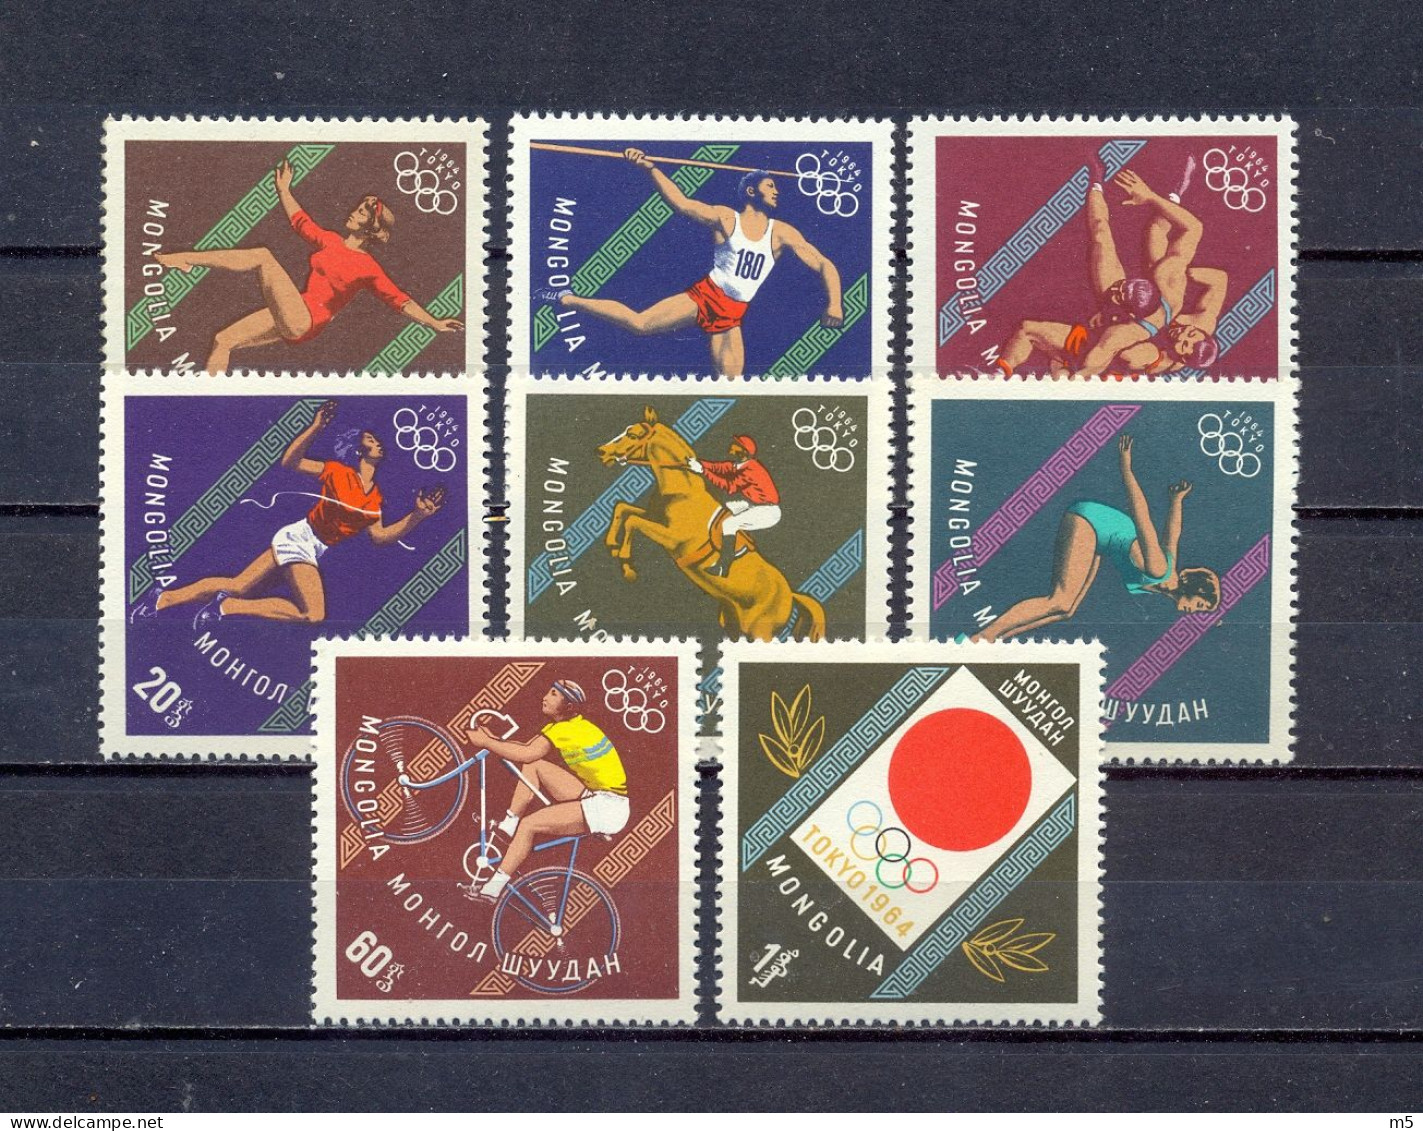 MONGOLIA - MNH - OLYMPIC GAMES TOKYO 1964. -  MI.NO.356/63 - CV = 3,5 € - Sommer 1964: Tokio